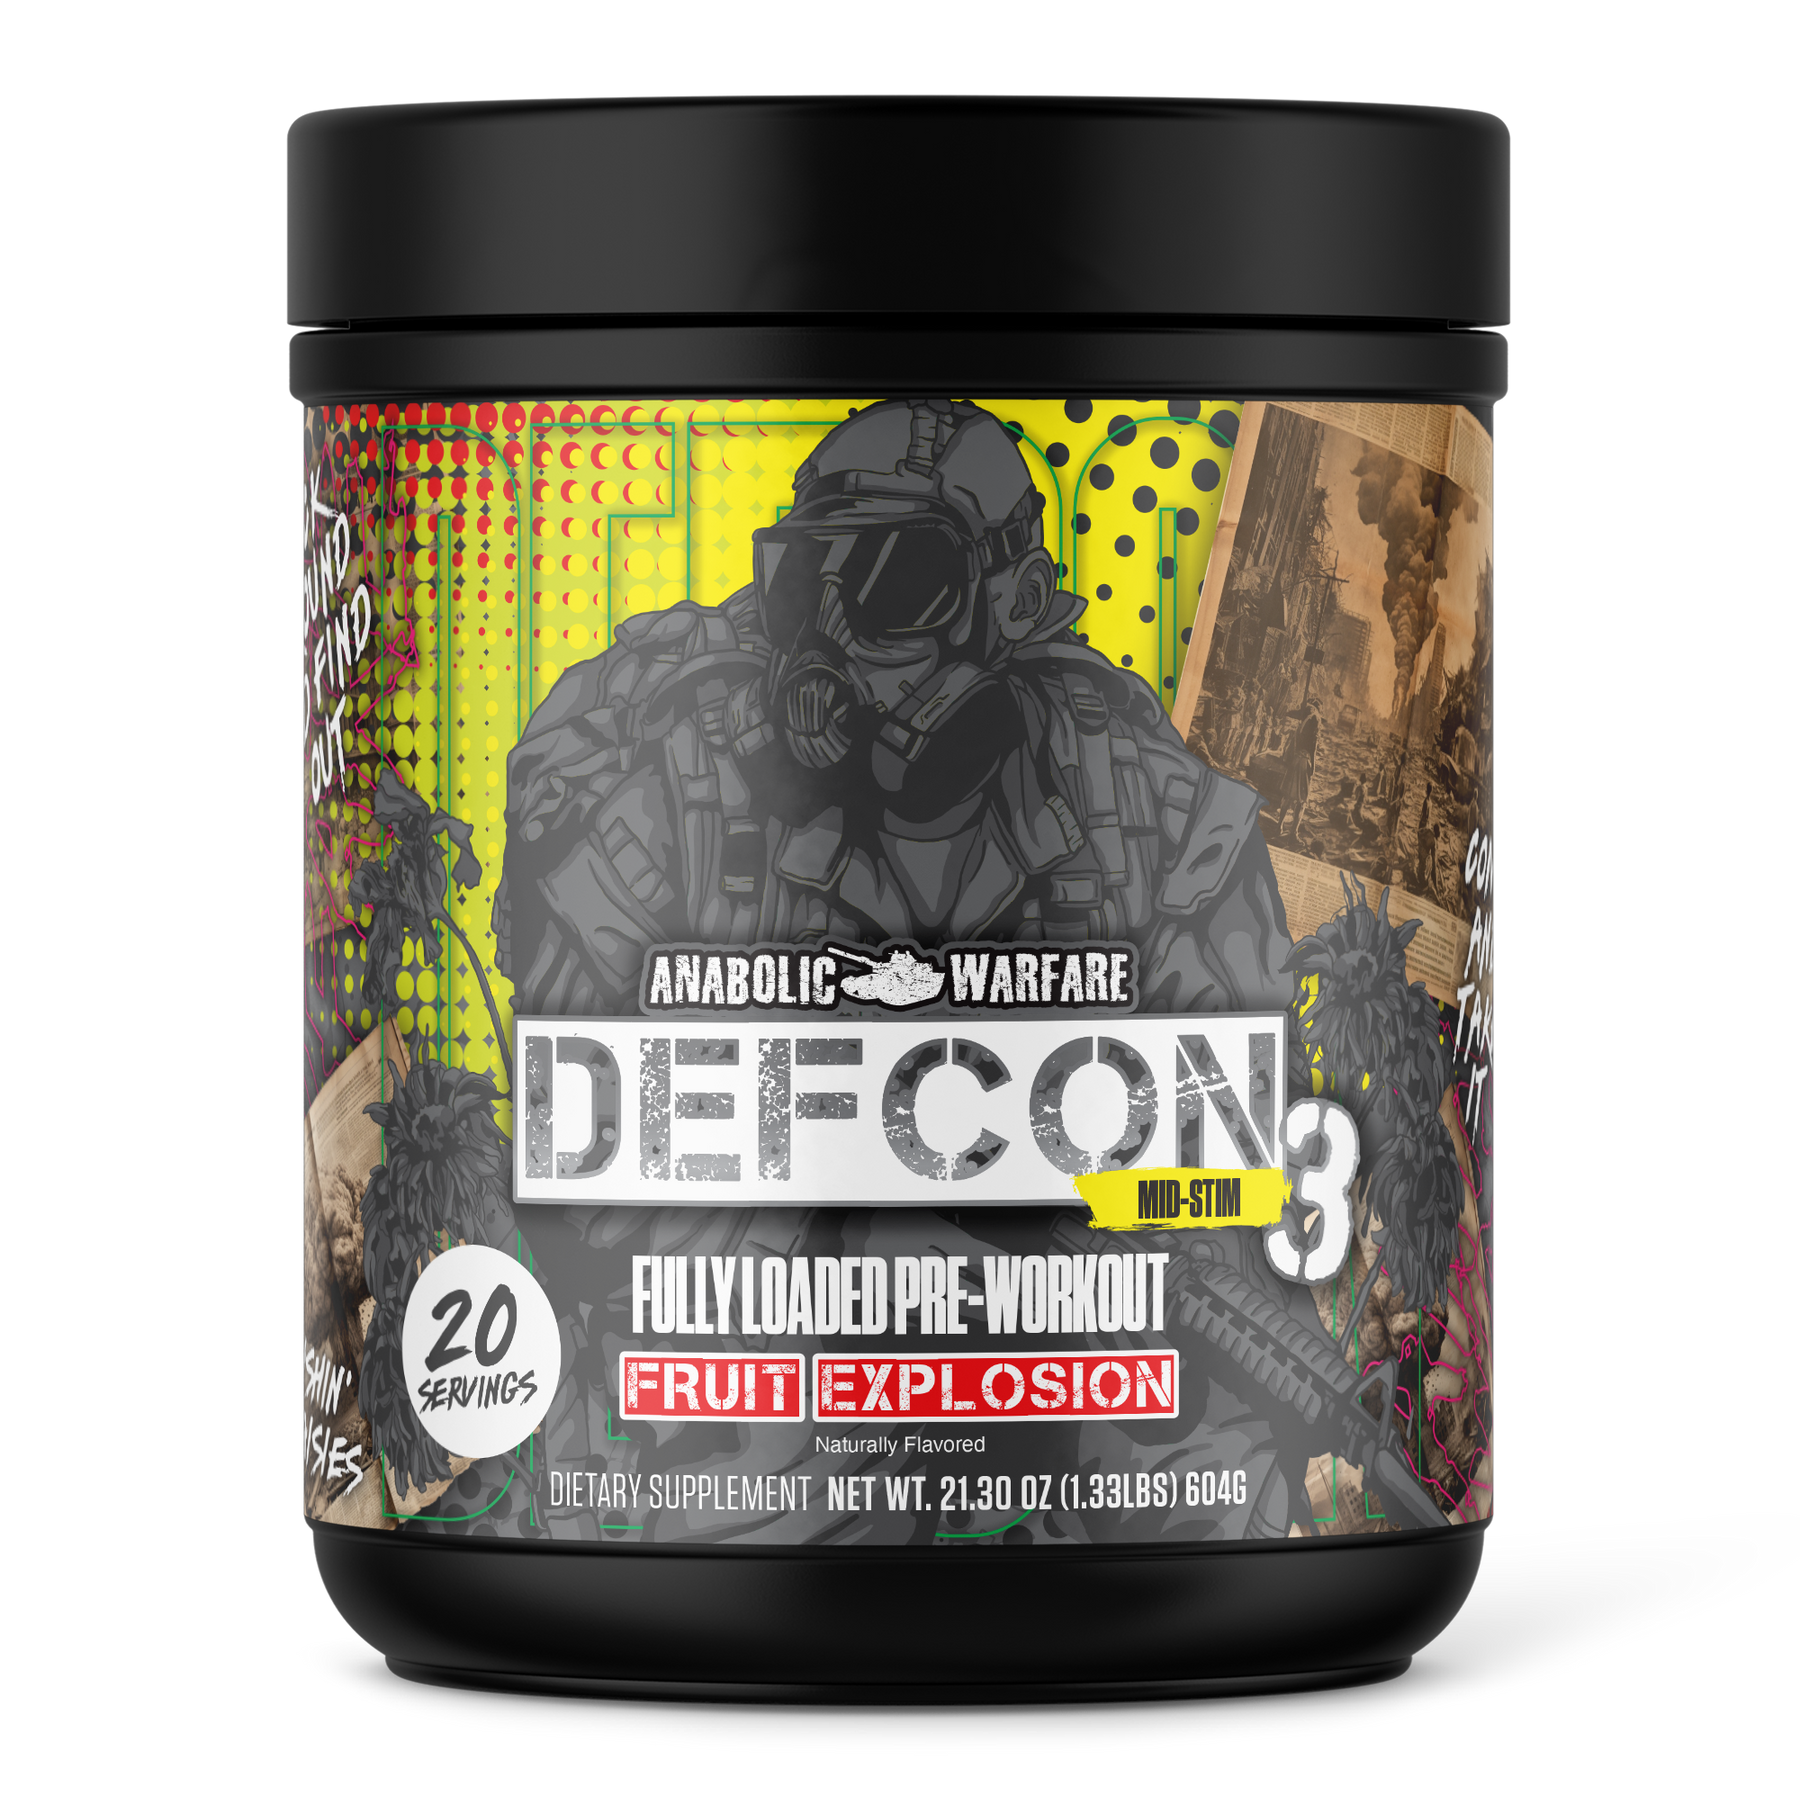 Defcon 3 Pre-workout by Anabolic Warfare